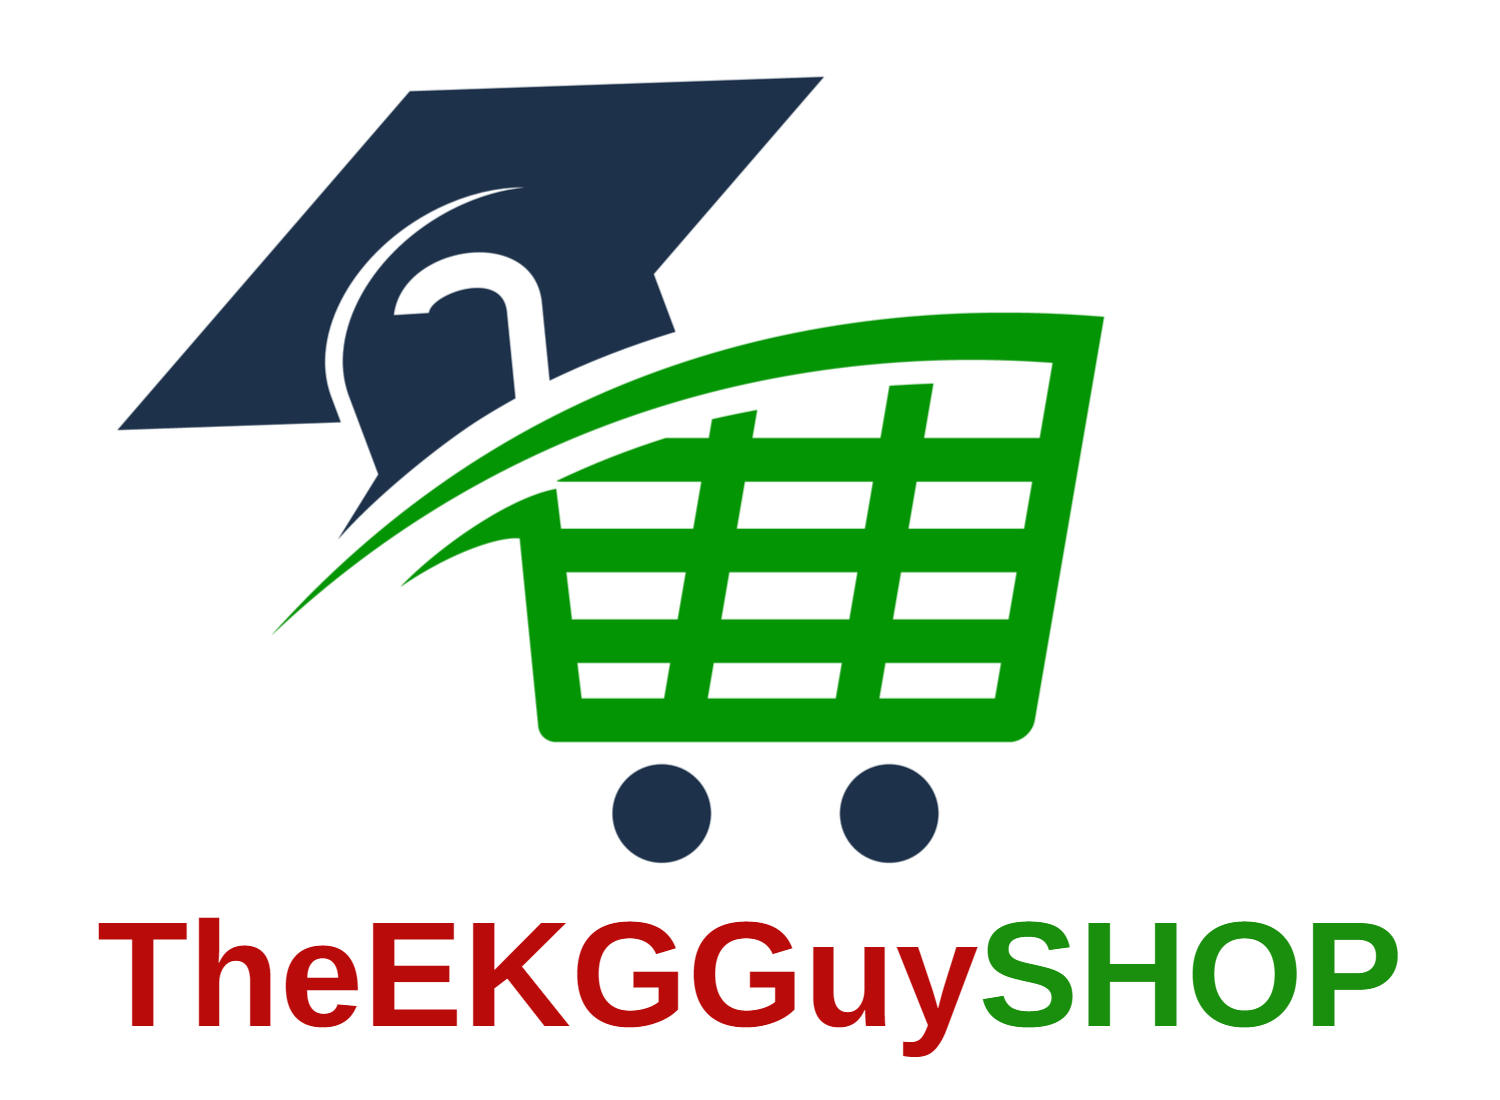 EKG Guy Shop